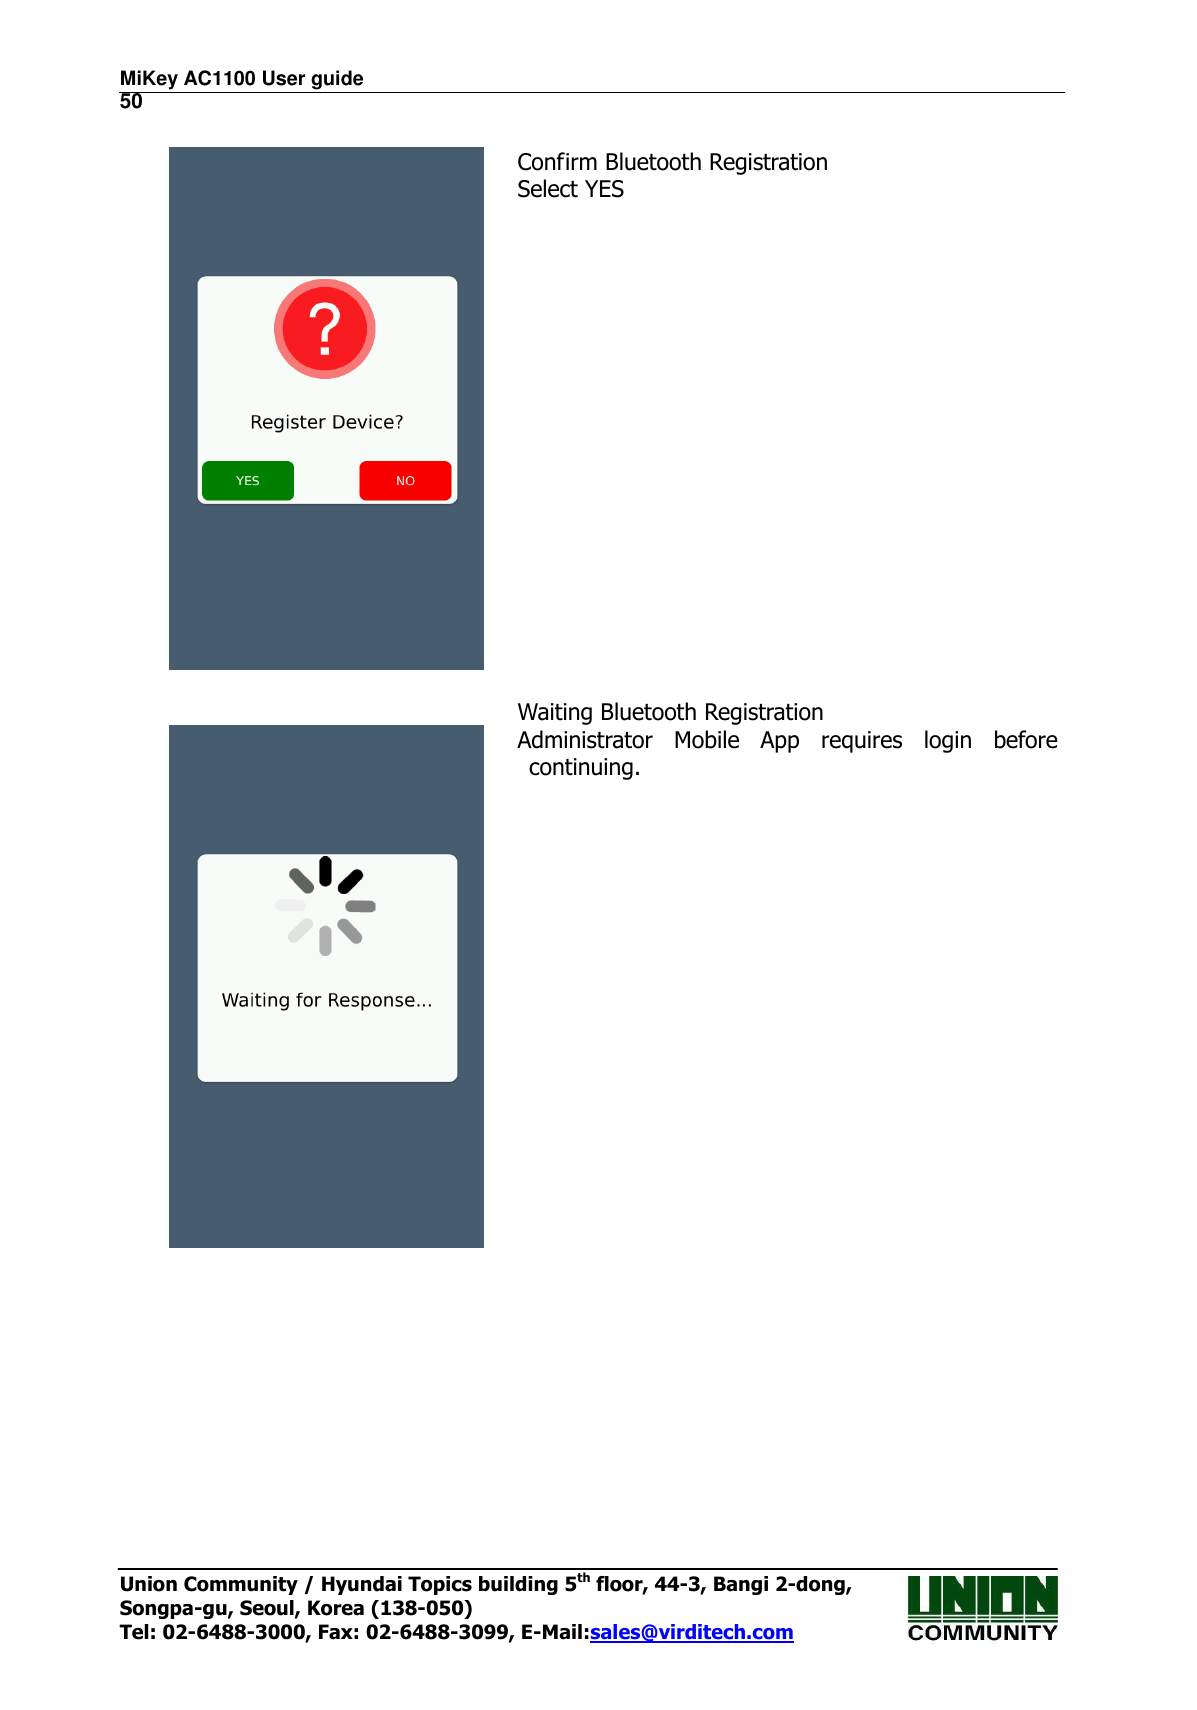 MiKey AC1100 User guide                                                                      50 Union Community / Hyundai Topics building 5th floor, 44-3, Bangi 2-dong,   Songpa-gu, Seoul, Korea (138-050) Tel: 02-6488-3000, Fax: 02-6488-3099, E-Mail:sales@virditech.com    Confirm Bluetooth Registration Select YES     Waiting Bluetooth Registration Administrator  Mobile  App  requires  login  before continuing. 